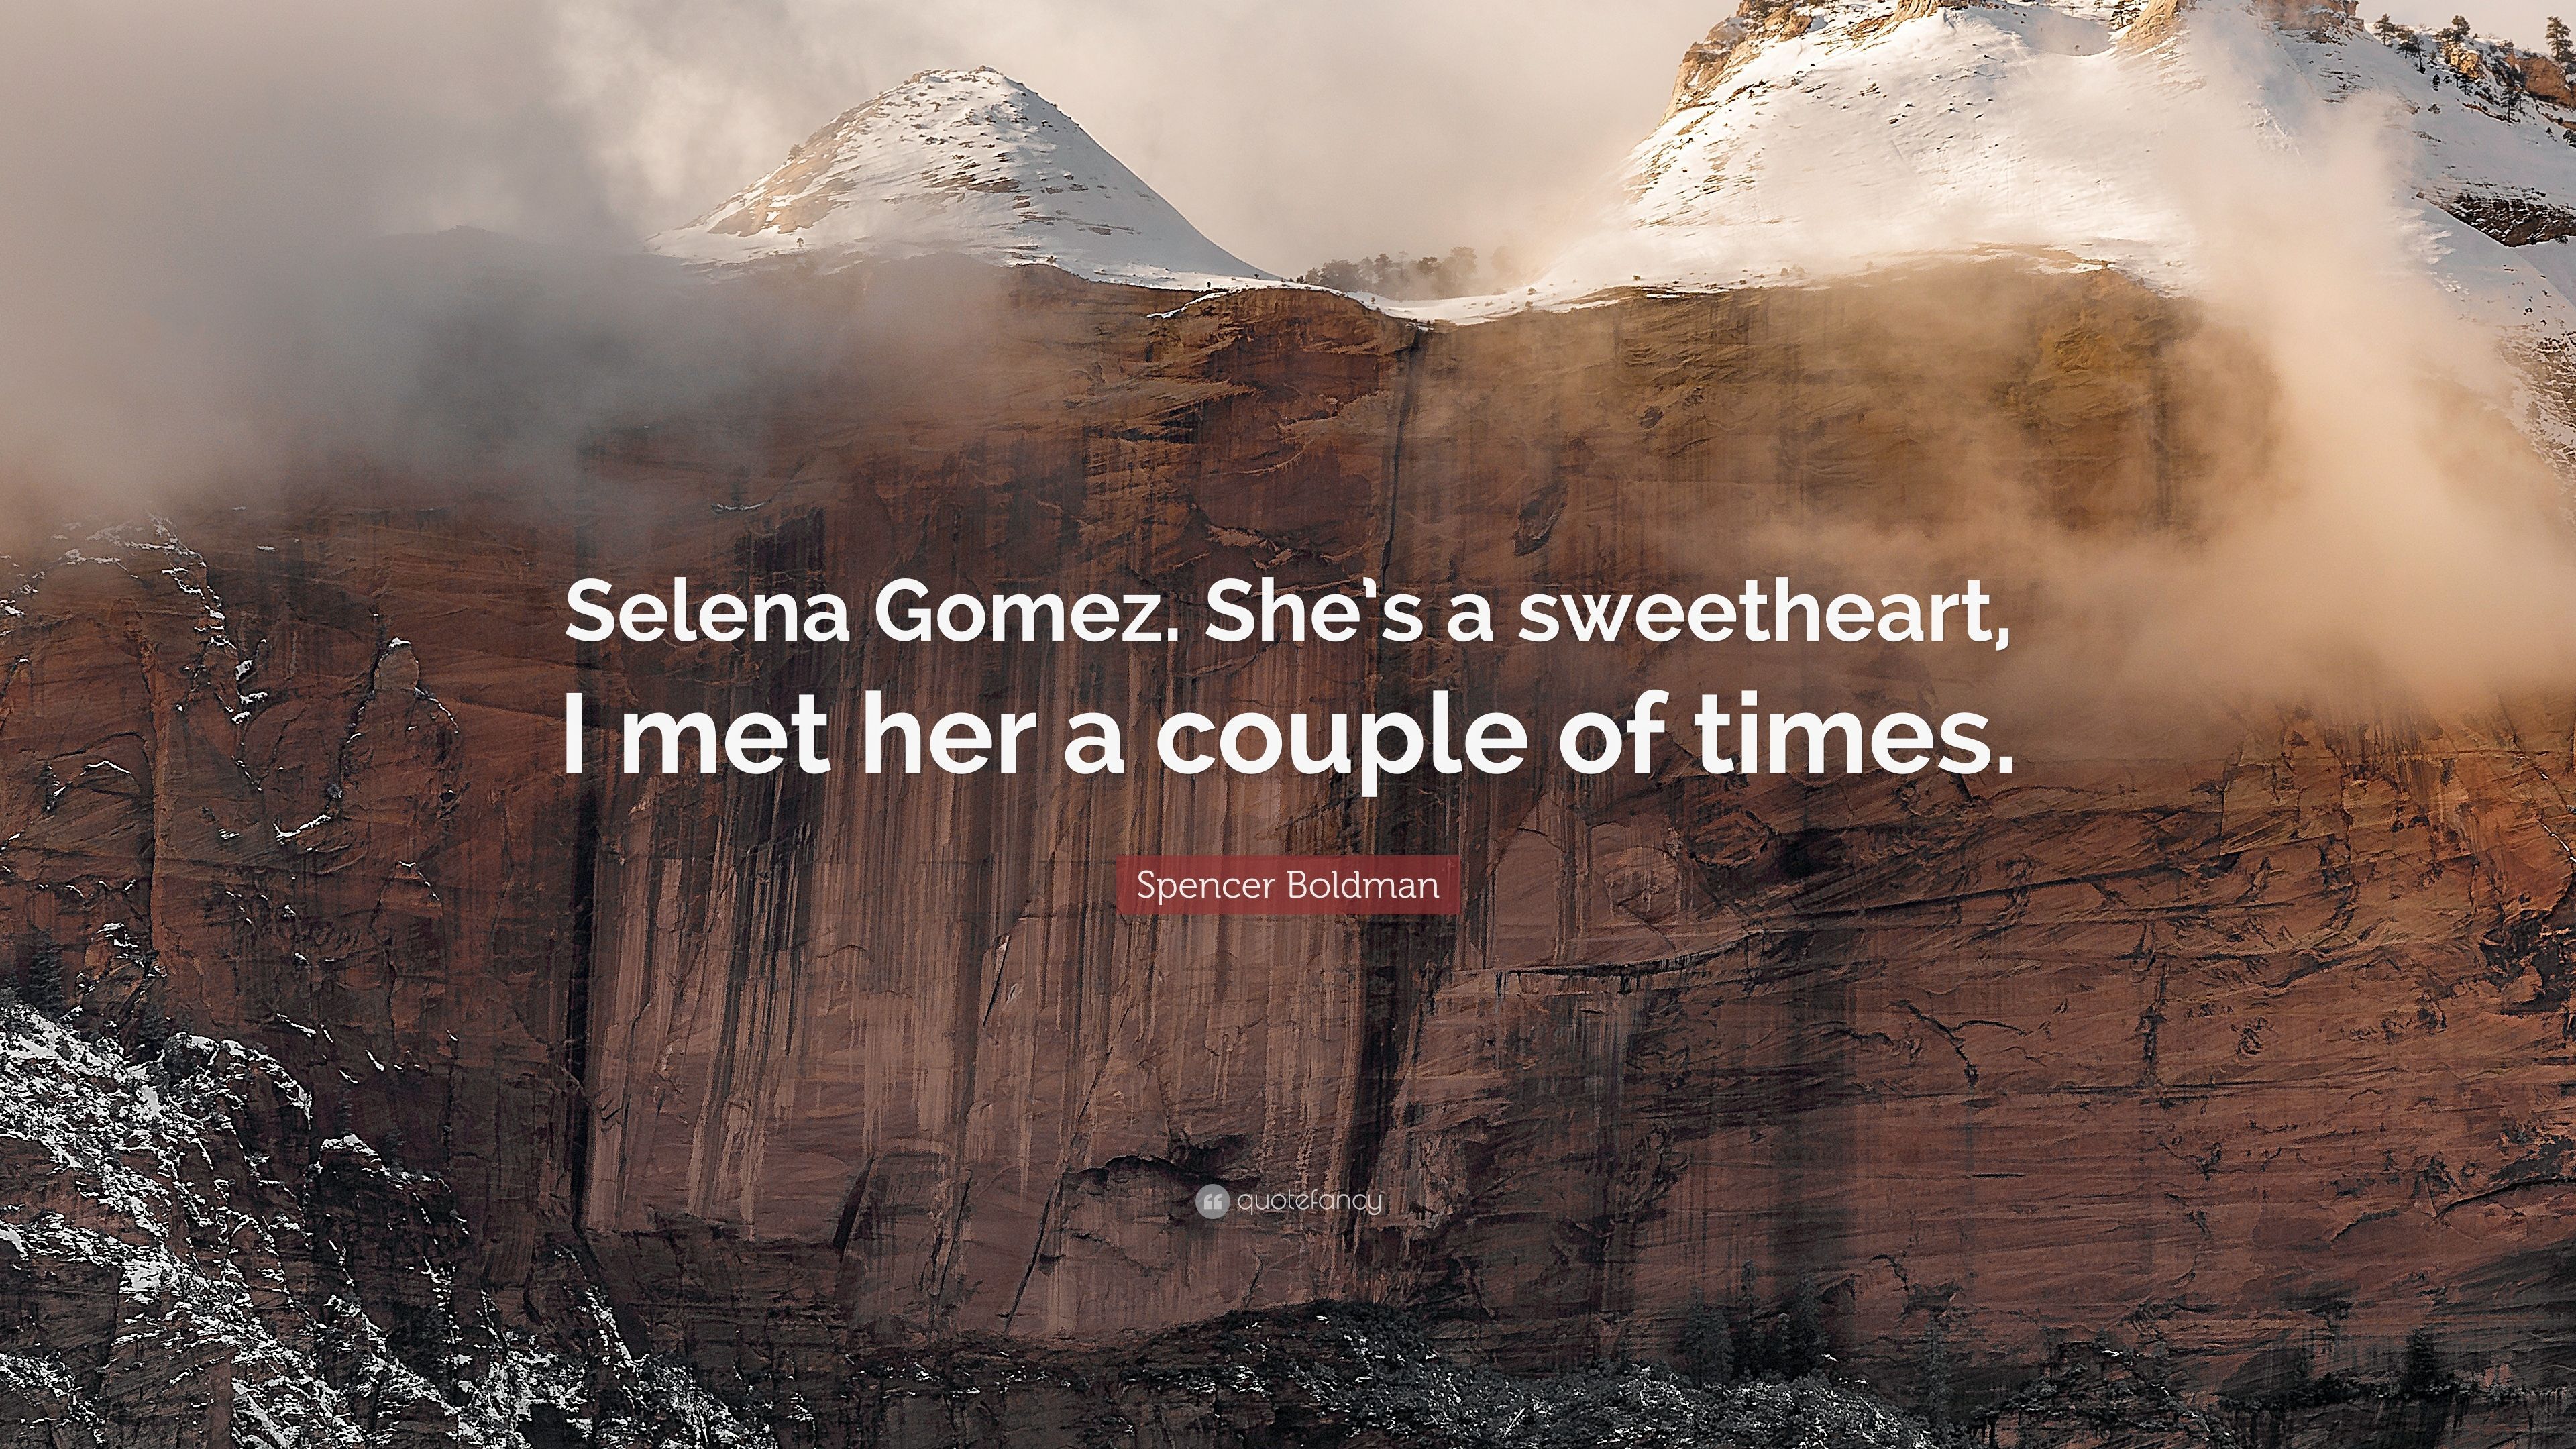 Spencer Boldman Quote: “Selena Gomez. She's a sweetheart, I met her